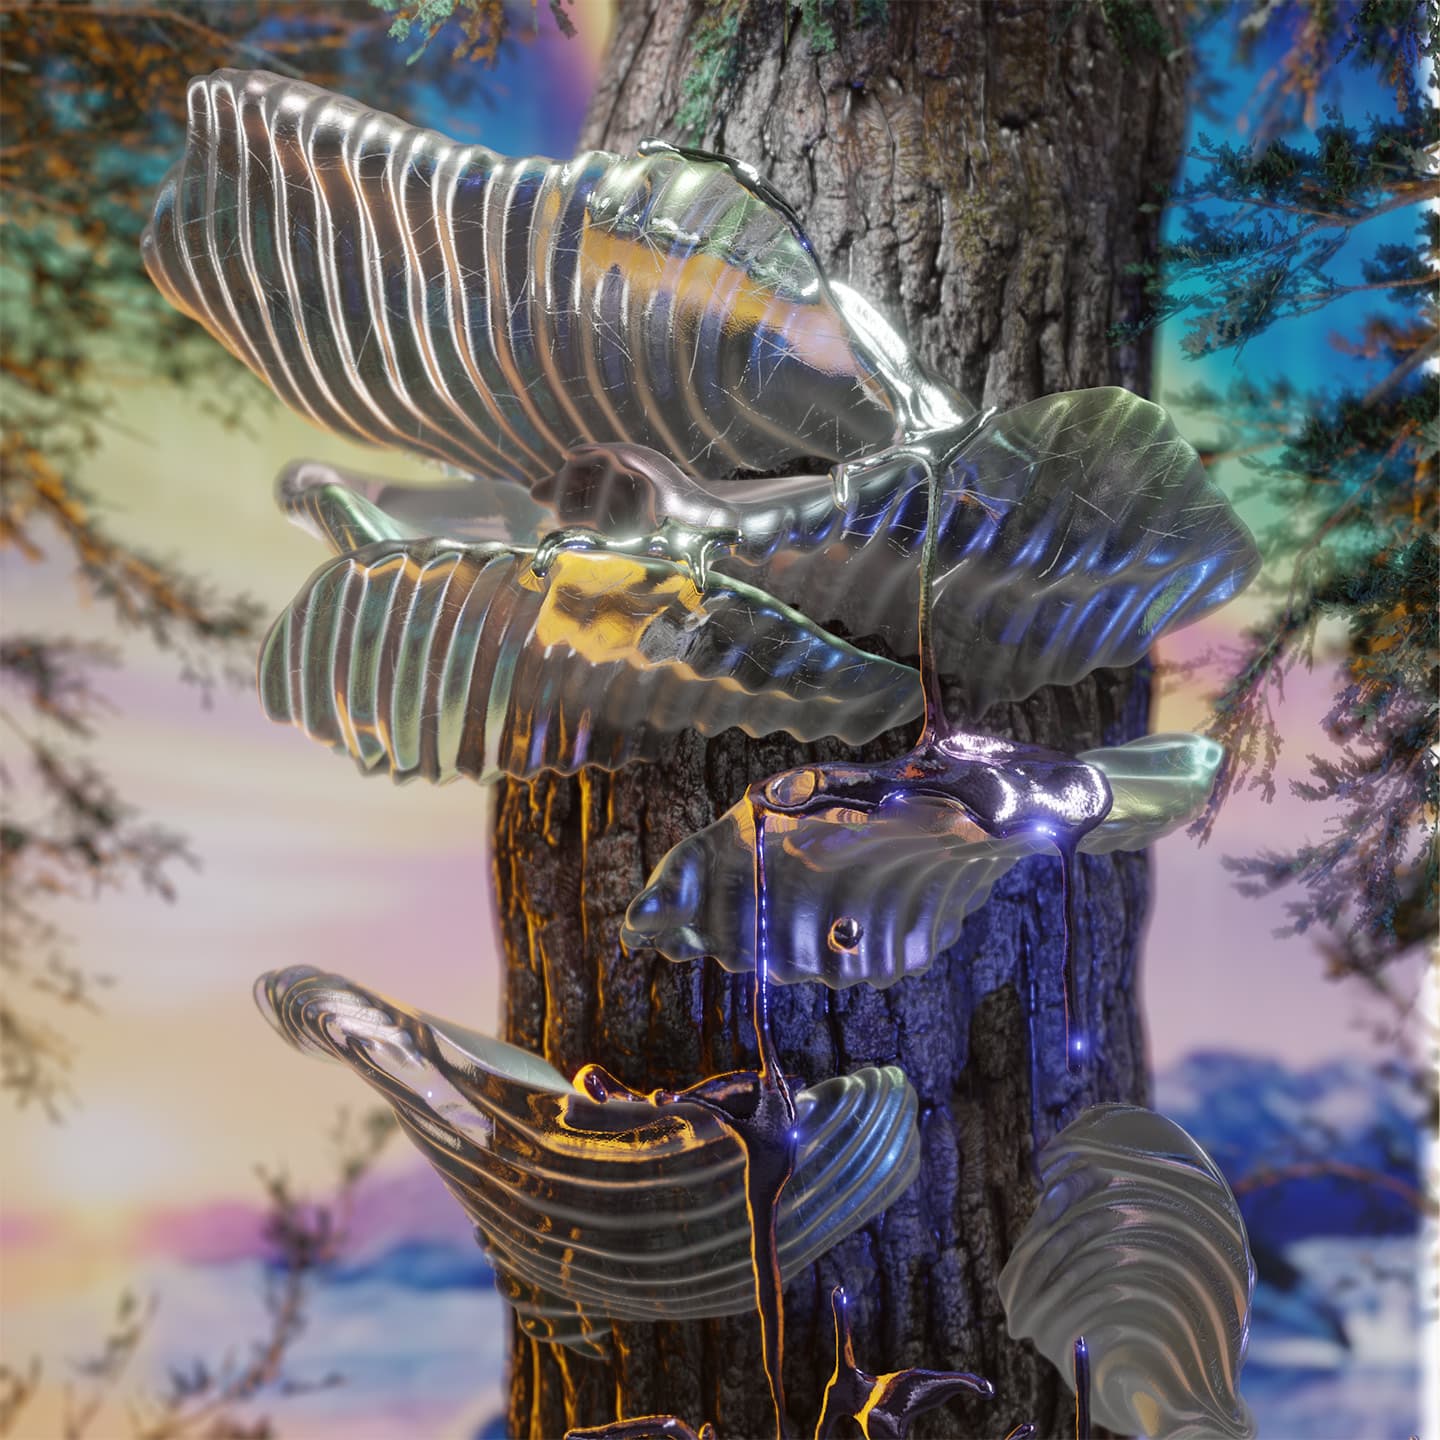 CGI image of glass mushrooms on tree trunk